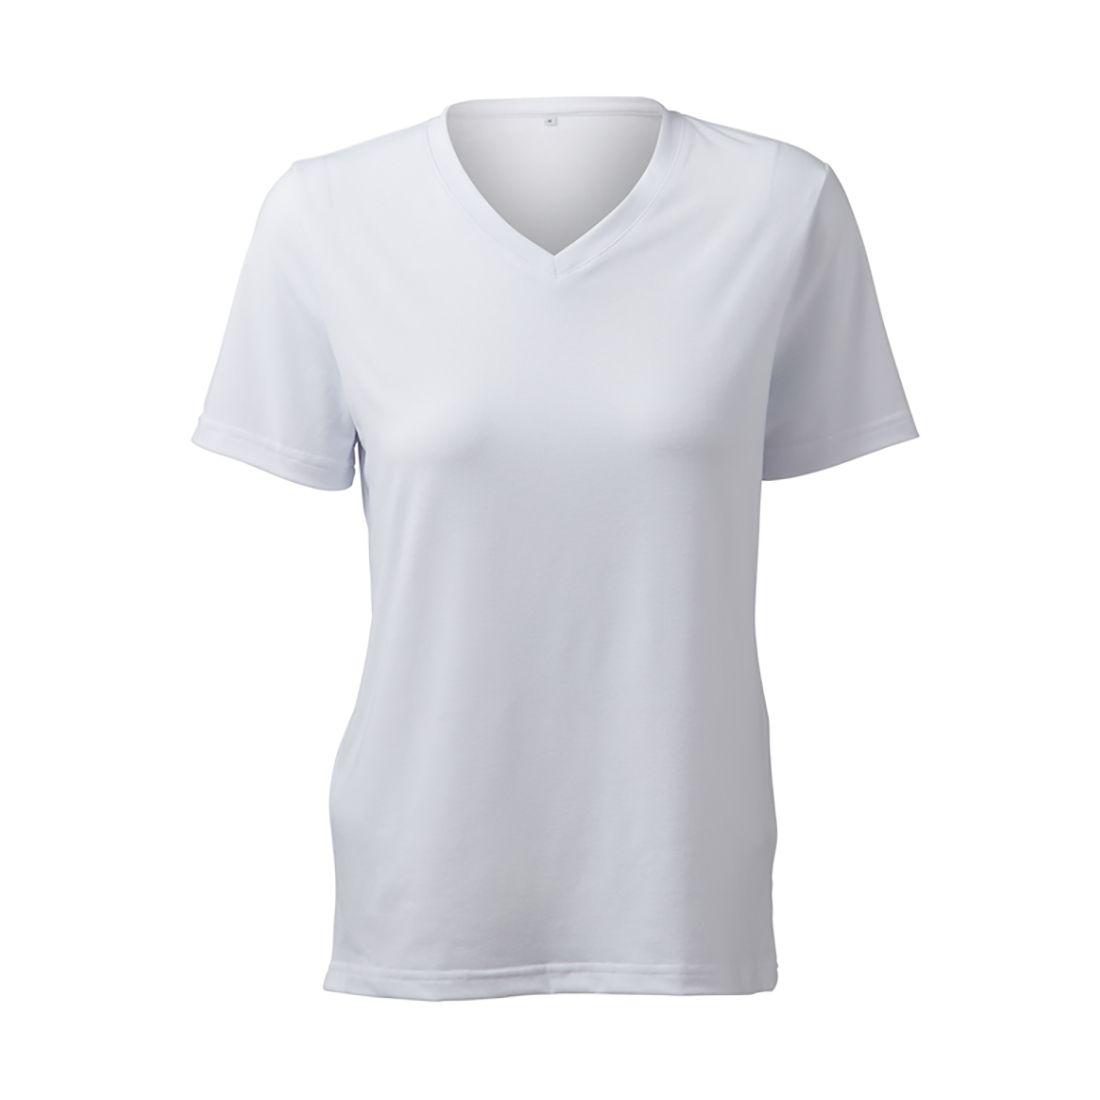 Cricut Infusible Ink Women's White T-Shirt (L)